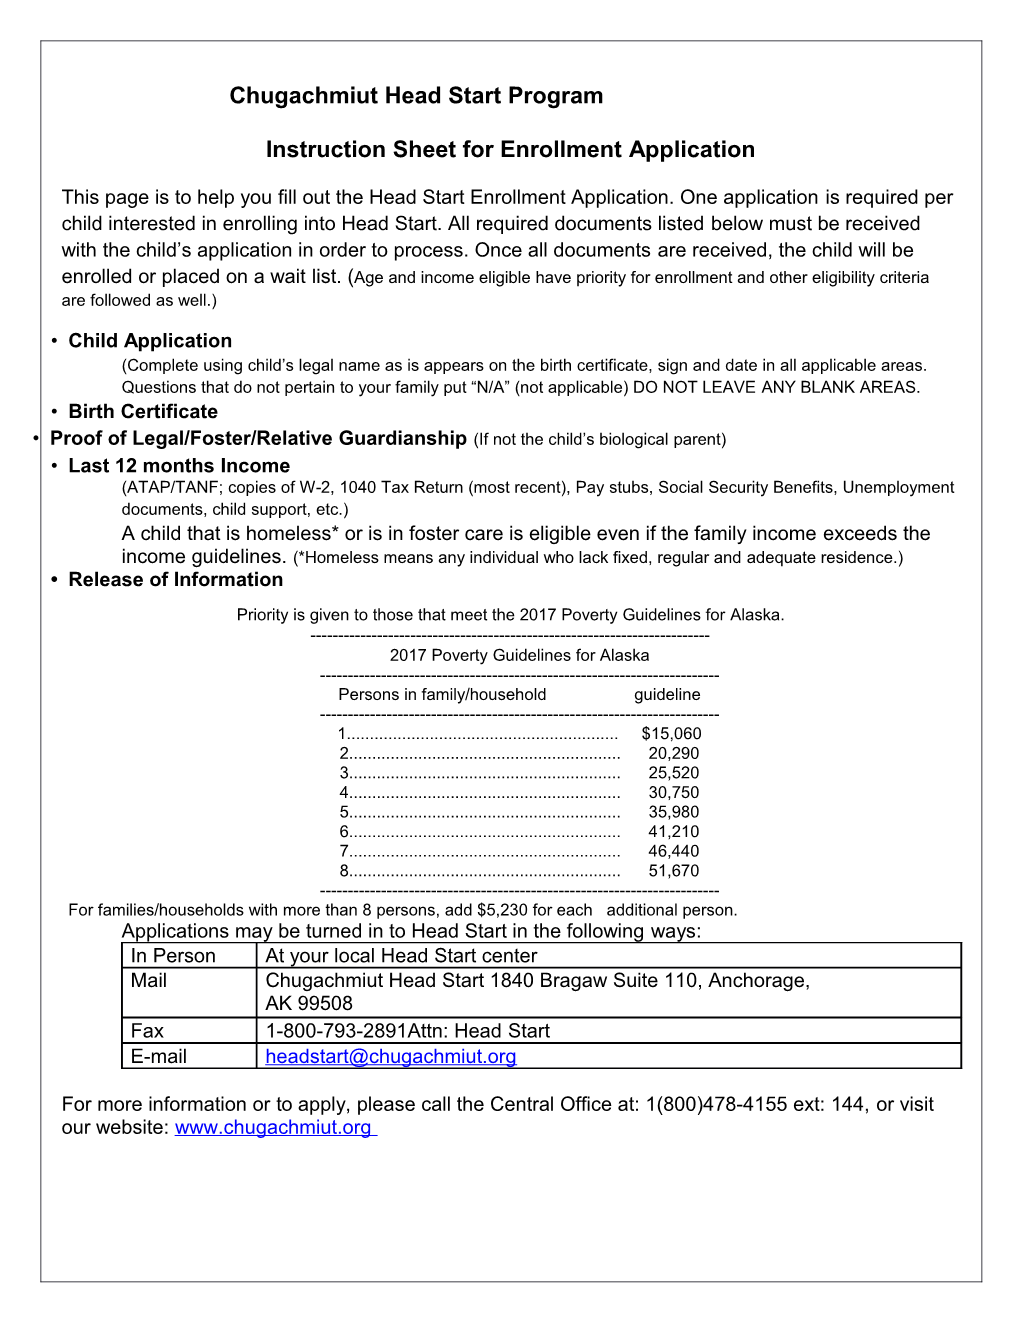 Instruction Sheet for Enrollment Application